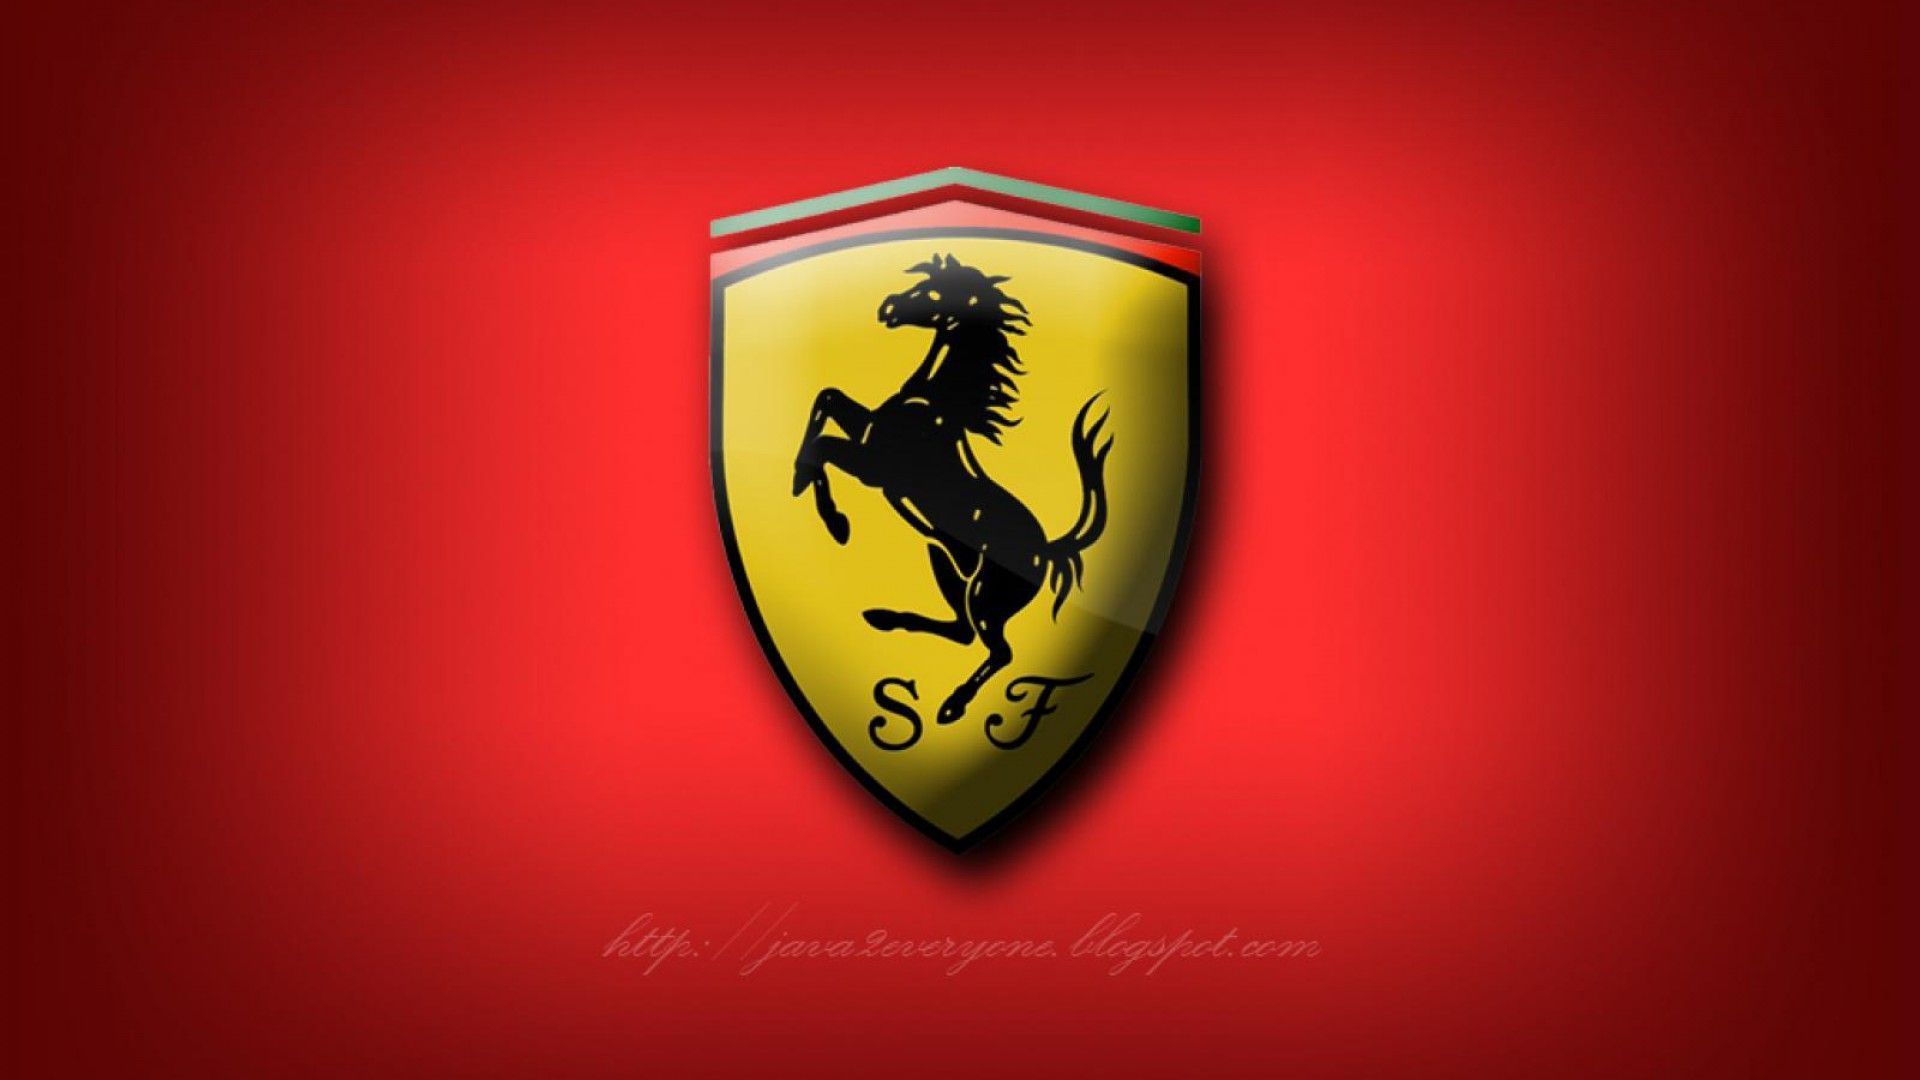 Ferrari Logo Wallpaper Hd 1080p - image